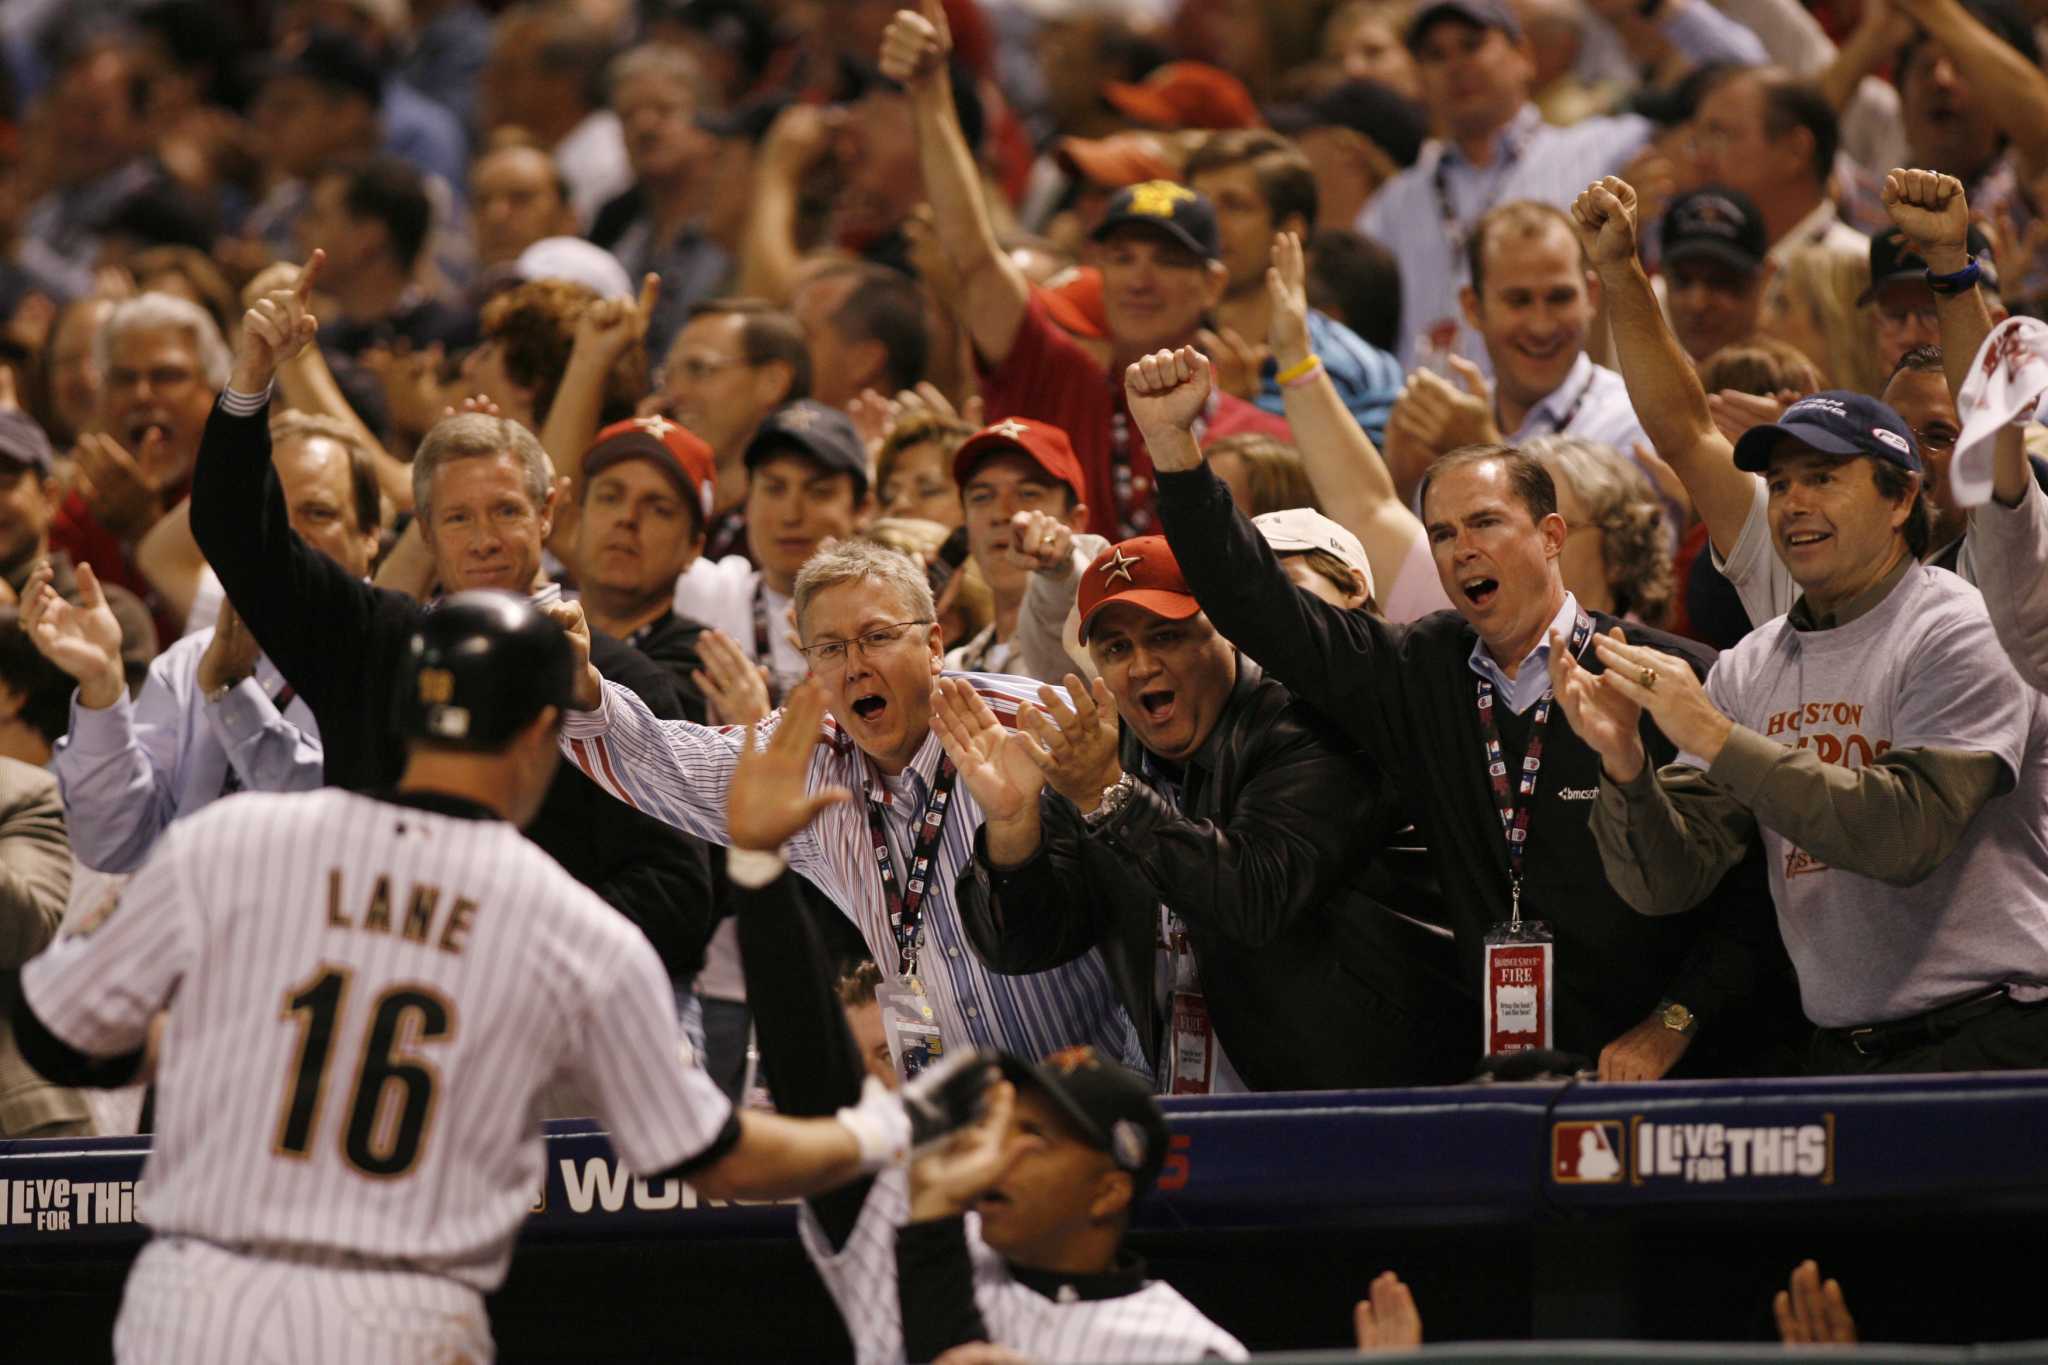 Chicago's Mark Buehrle celebrates with catcher Chris Widger after